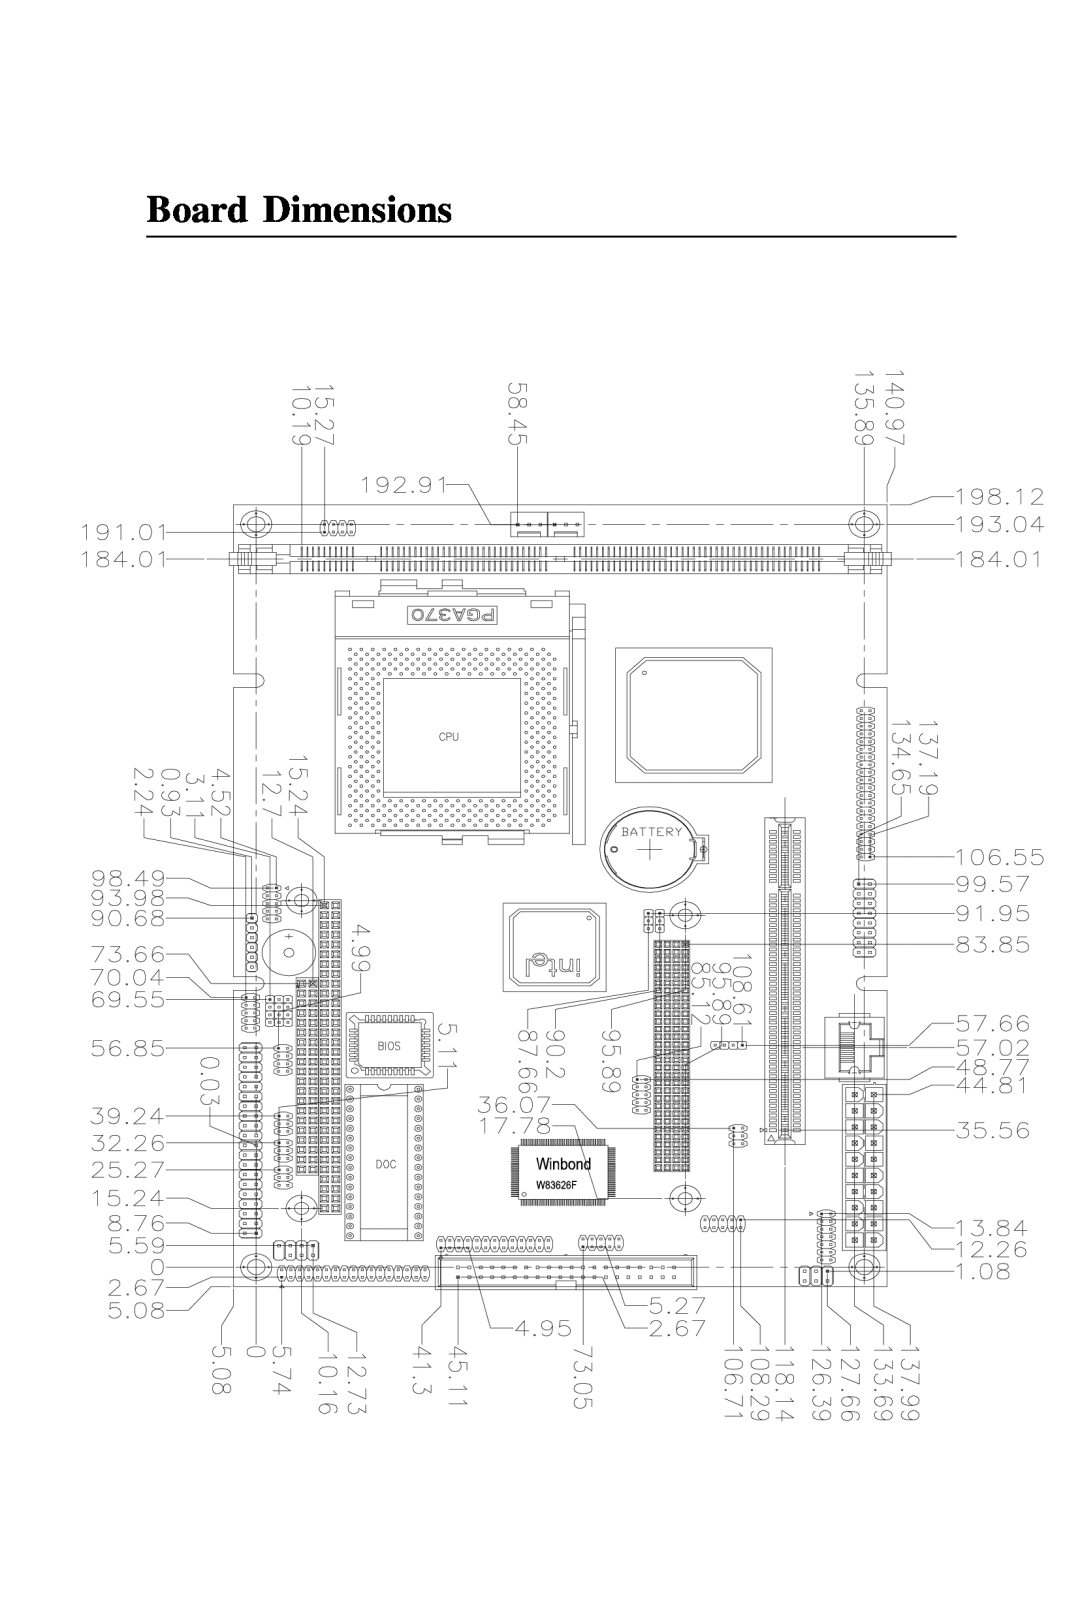 Intel PCM-6896 manual Board Dimensions 